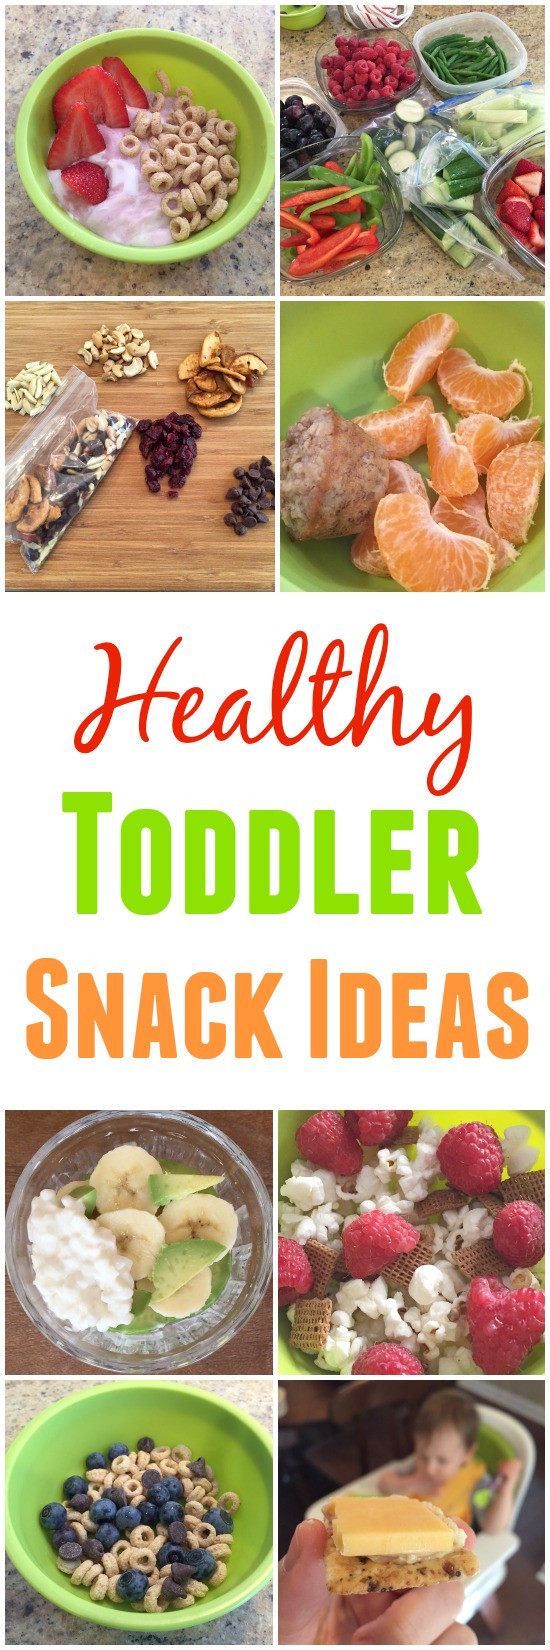 Toddler Healthy Snacks
 Healthy Toddler Snacks